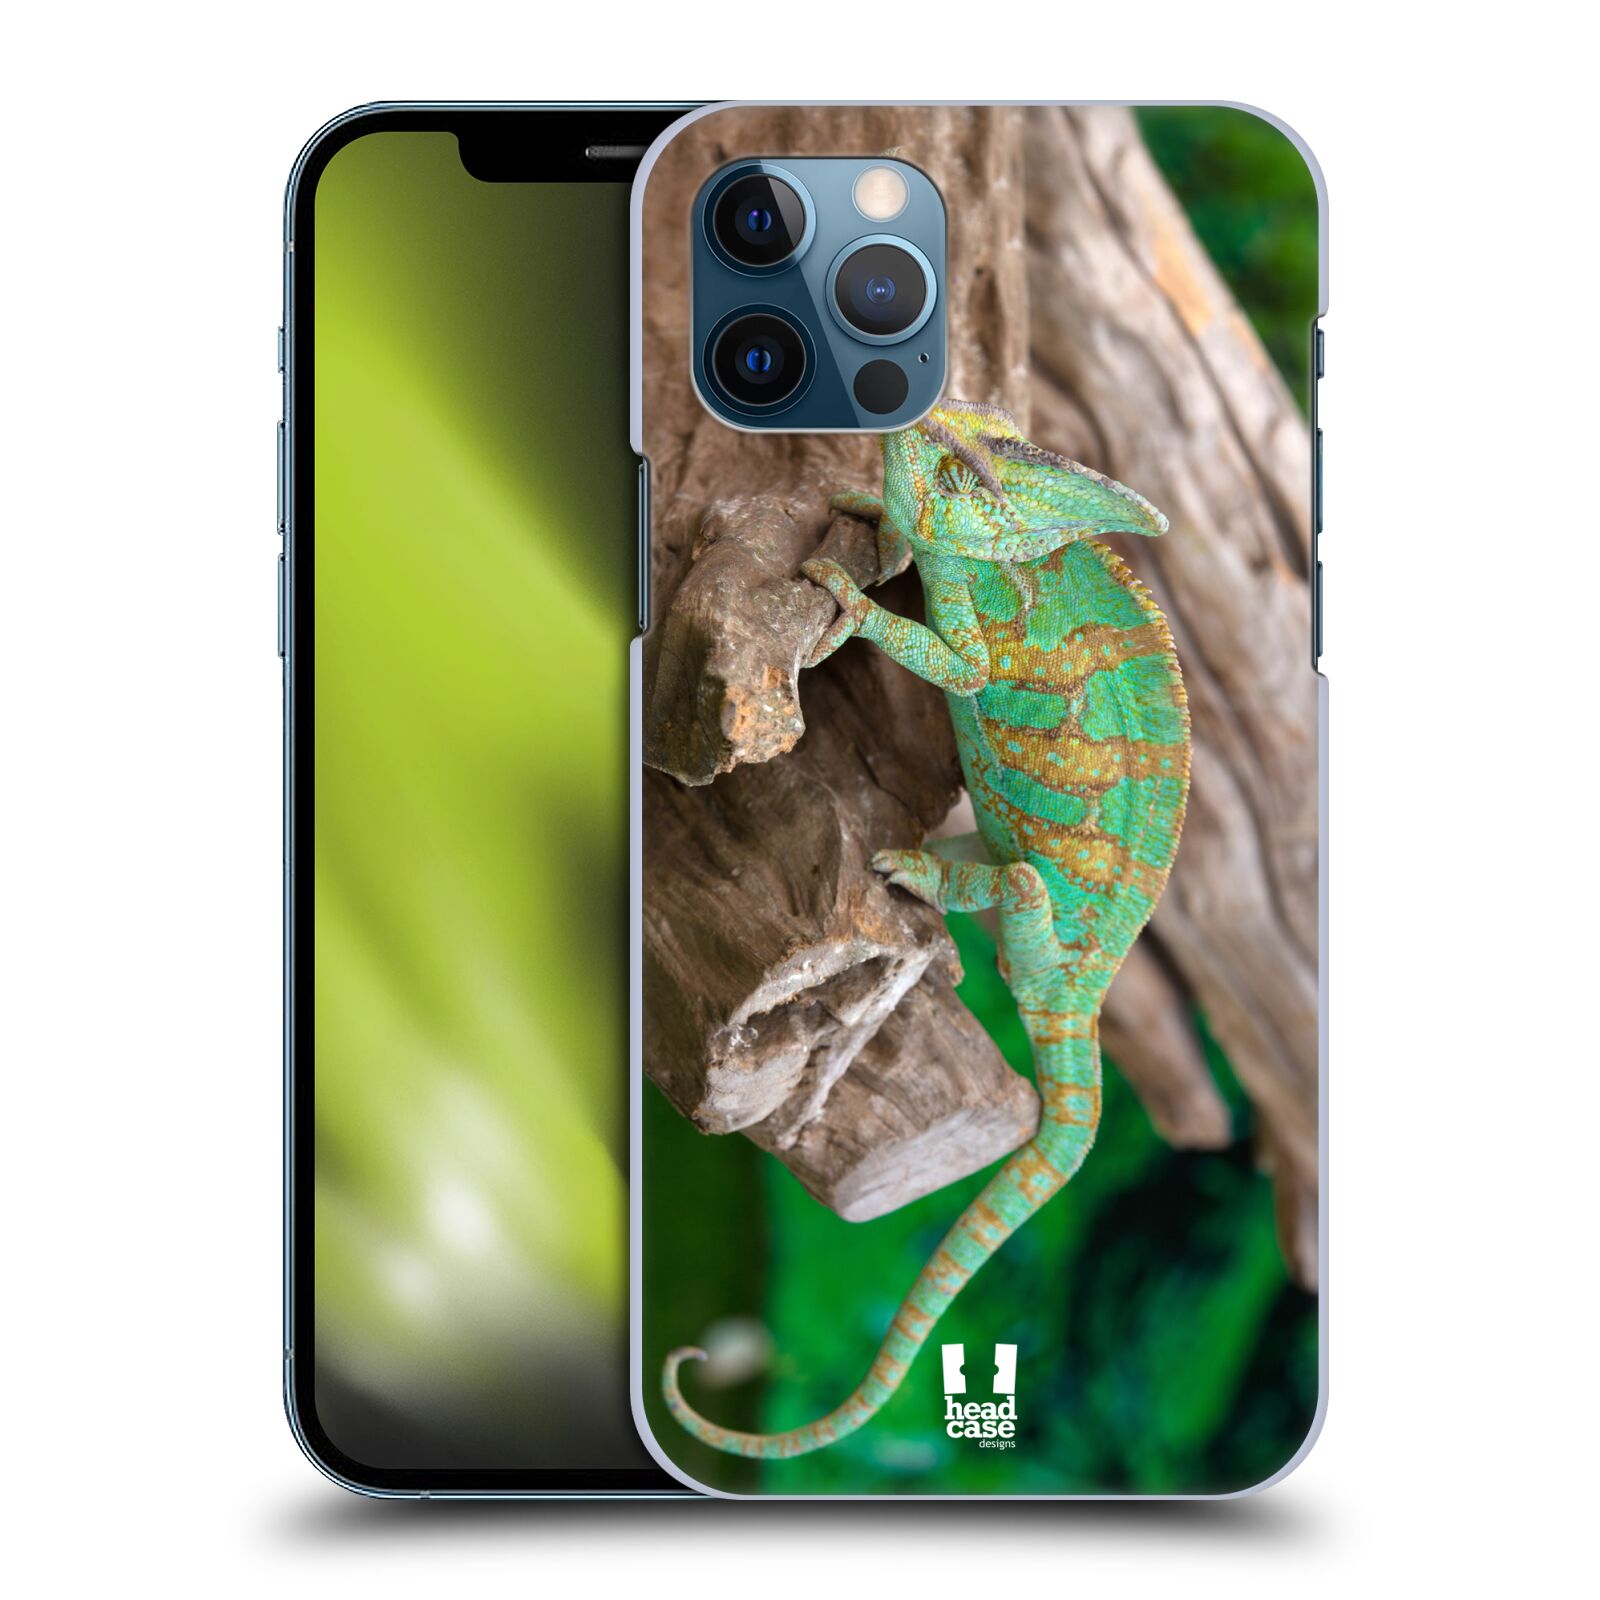 HEAD CASE plastový obal na mobil Apple Iphone 12 / Iphone 12 PRO vzor slavná zvířata foto chameleon